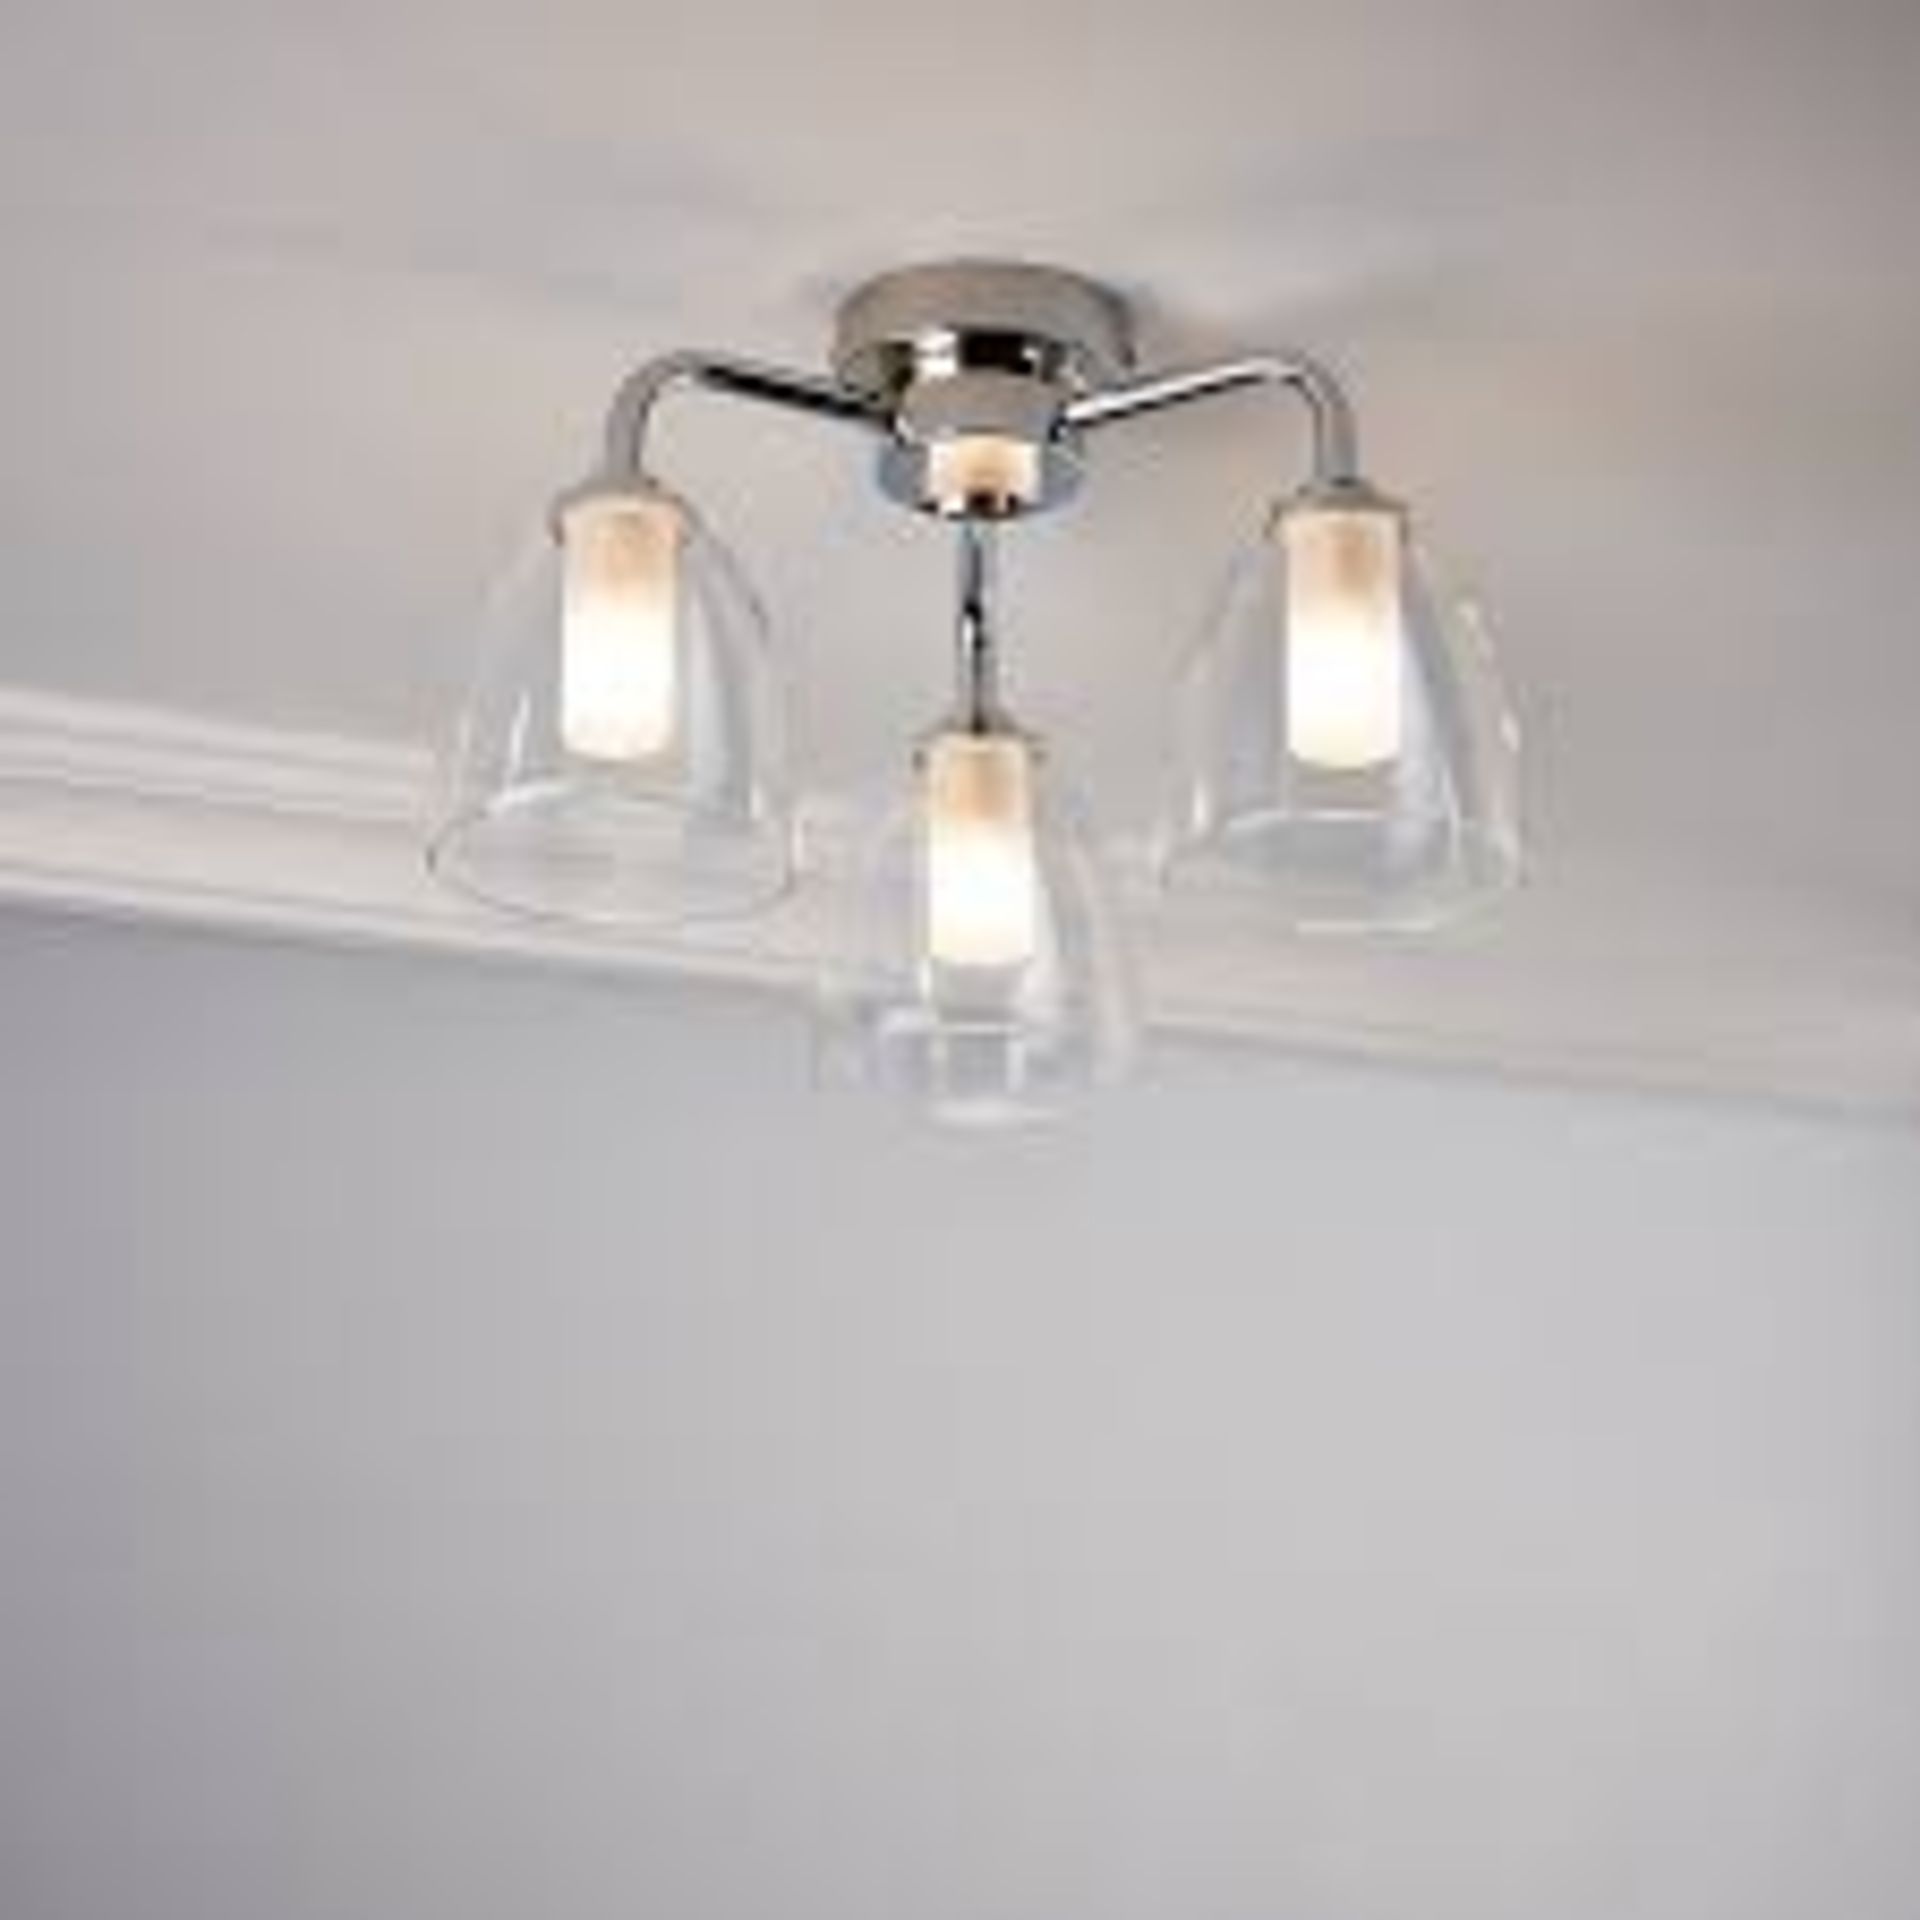 Carisi Ceiling Light 3 Way Bathroom Chrome Effect Bell Glass Shade. - S2.3.